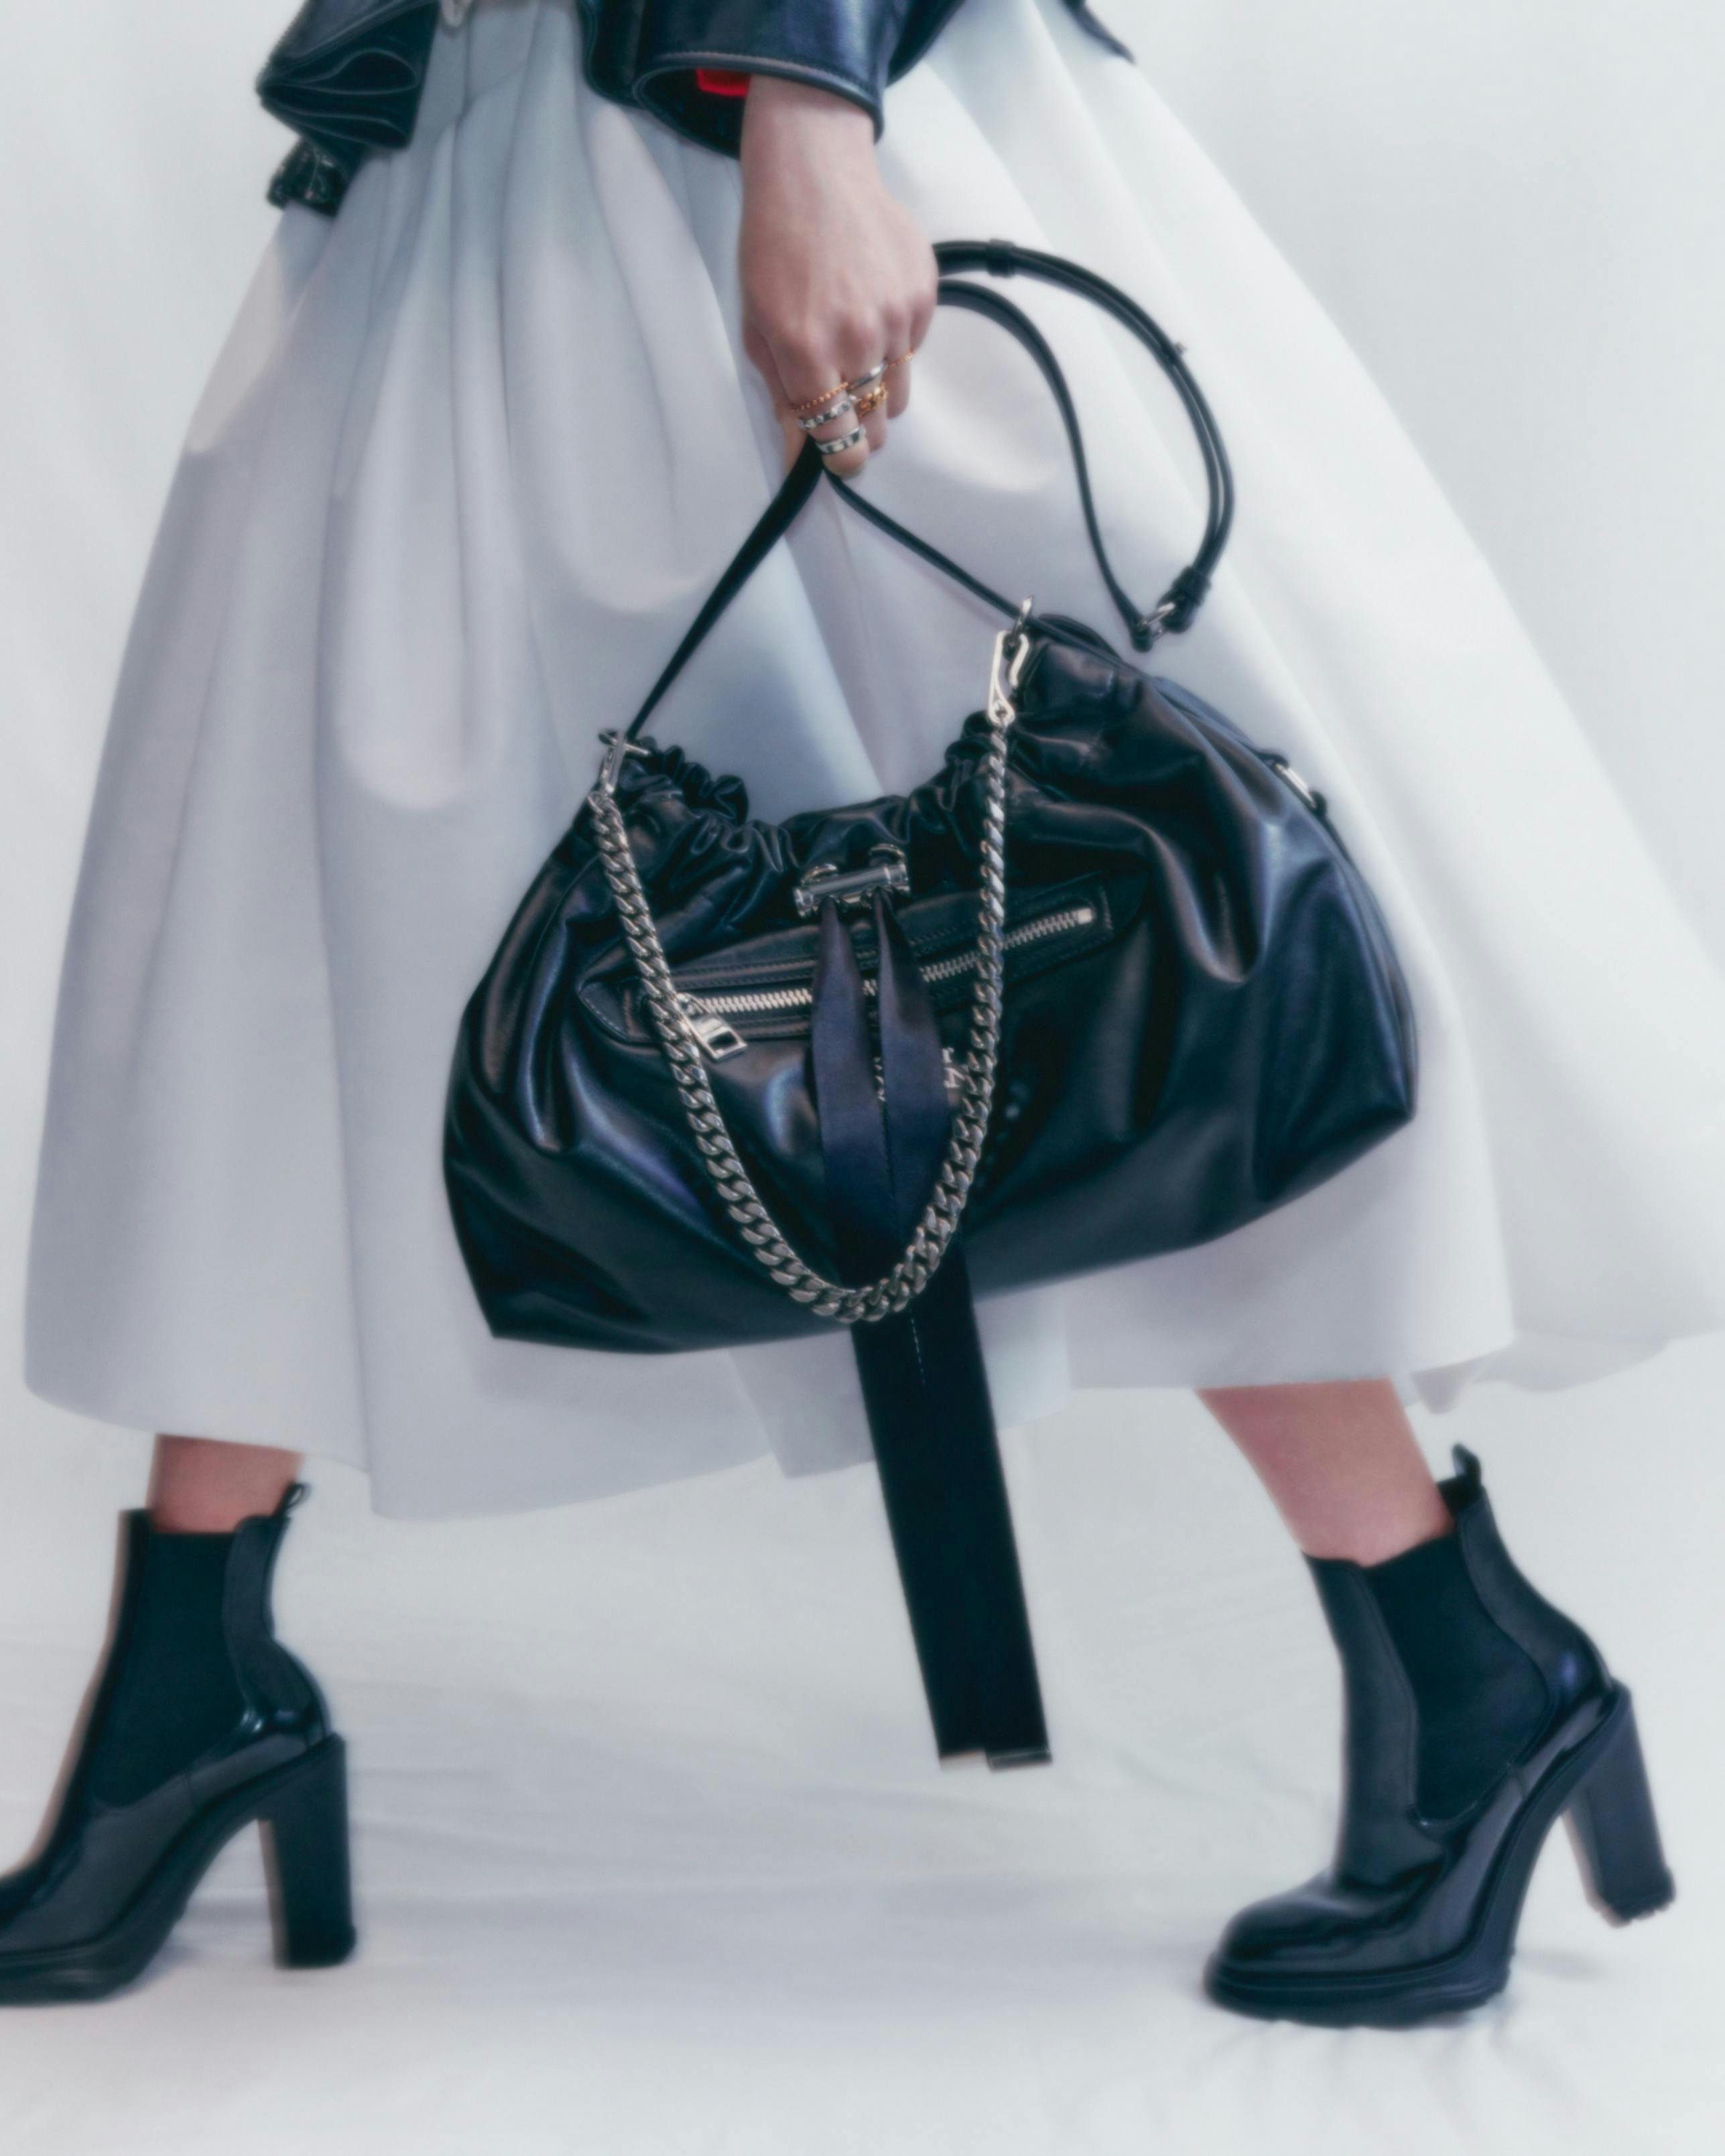 clothing apparel high heel shoe footwear handbag accessories bag purse person